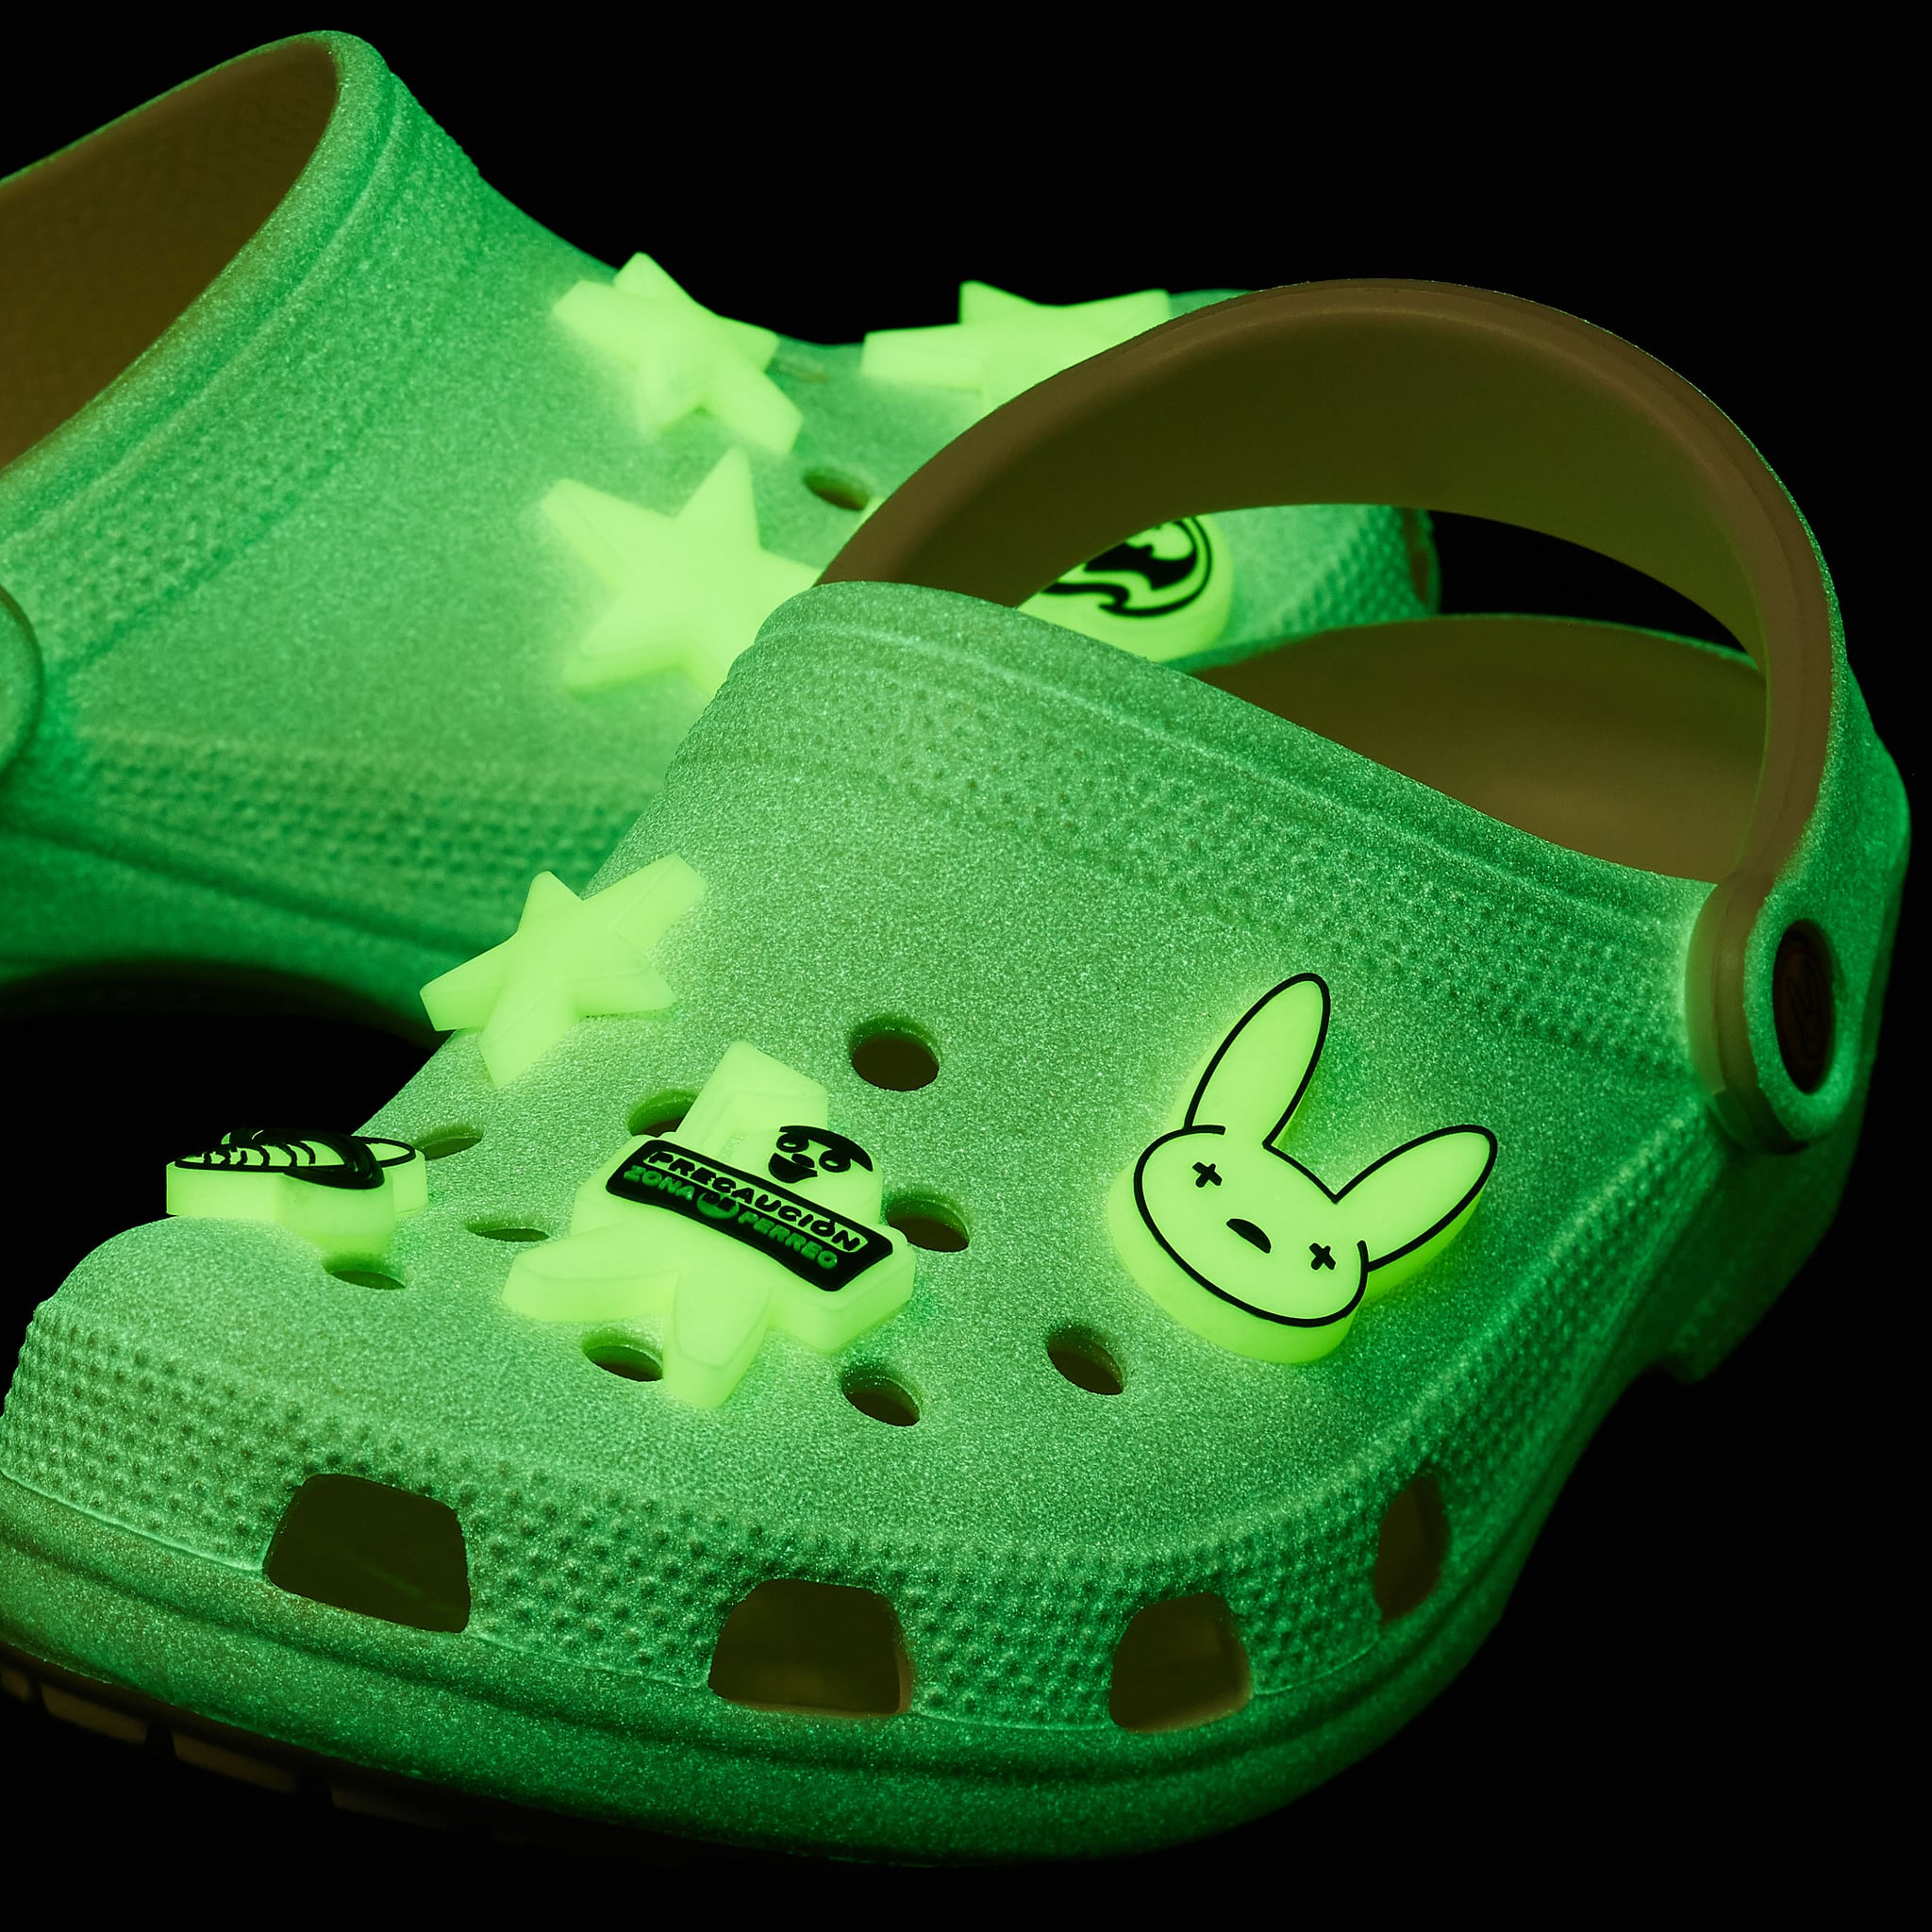 Glow-in-the-Dark Crocs Collaboration 